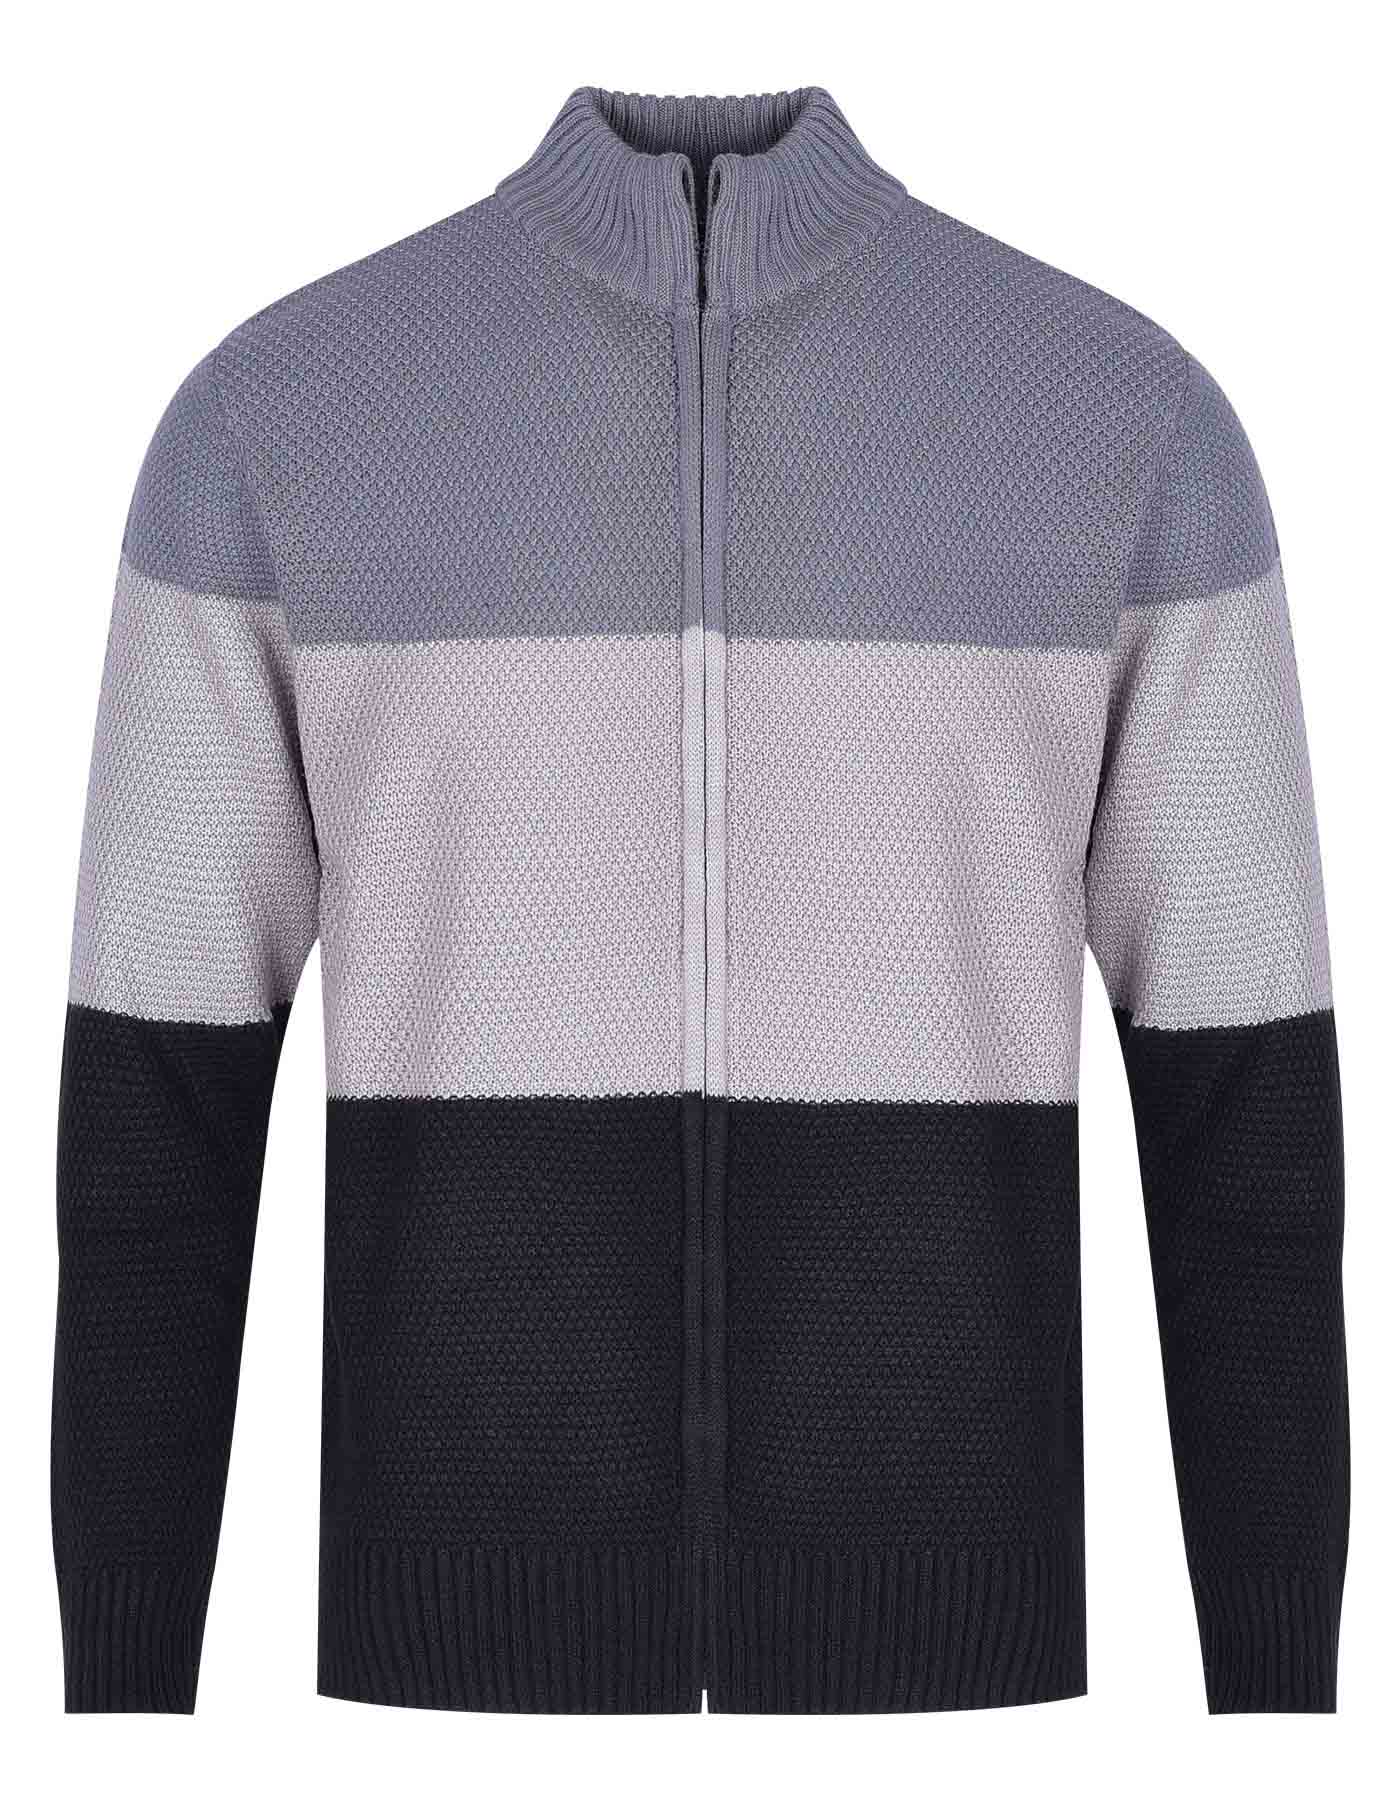 Grey Stripe Full Zipper Sweater